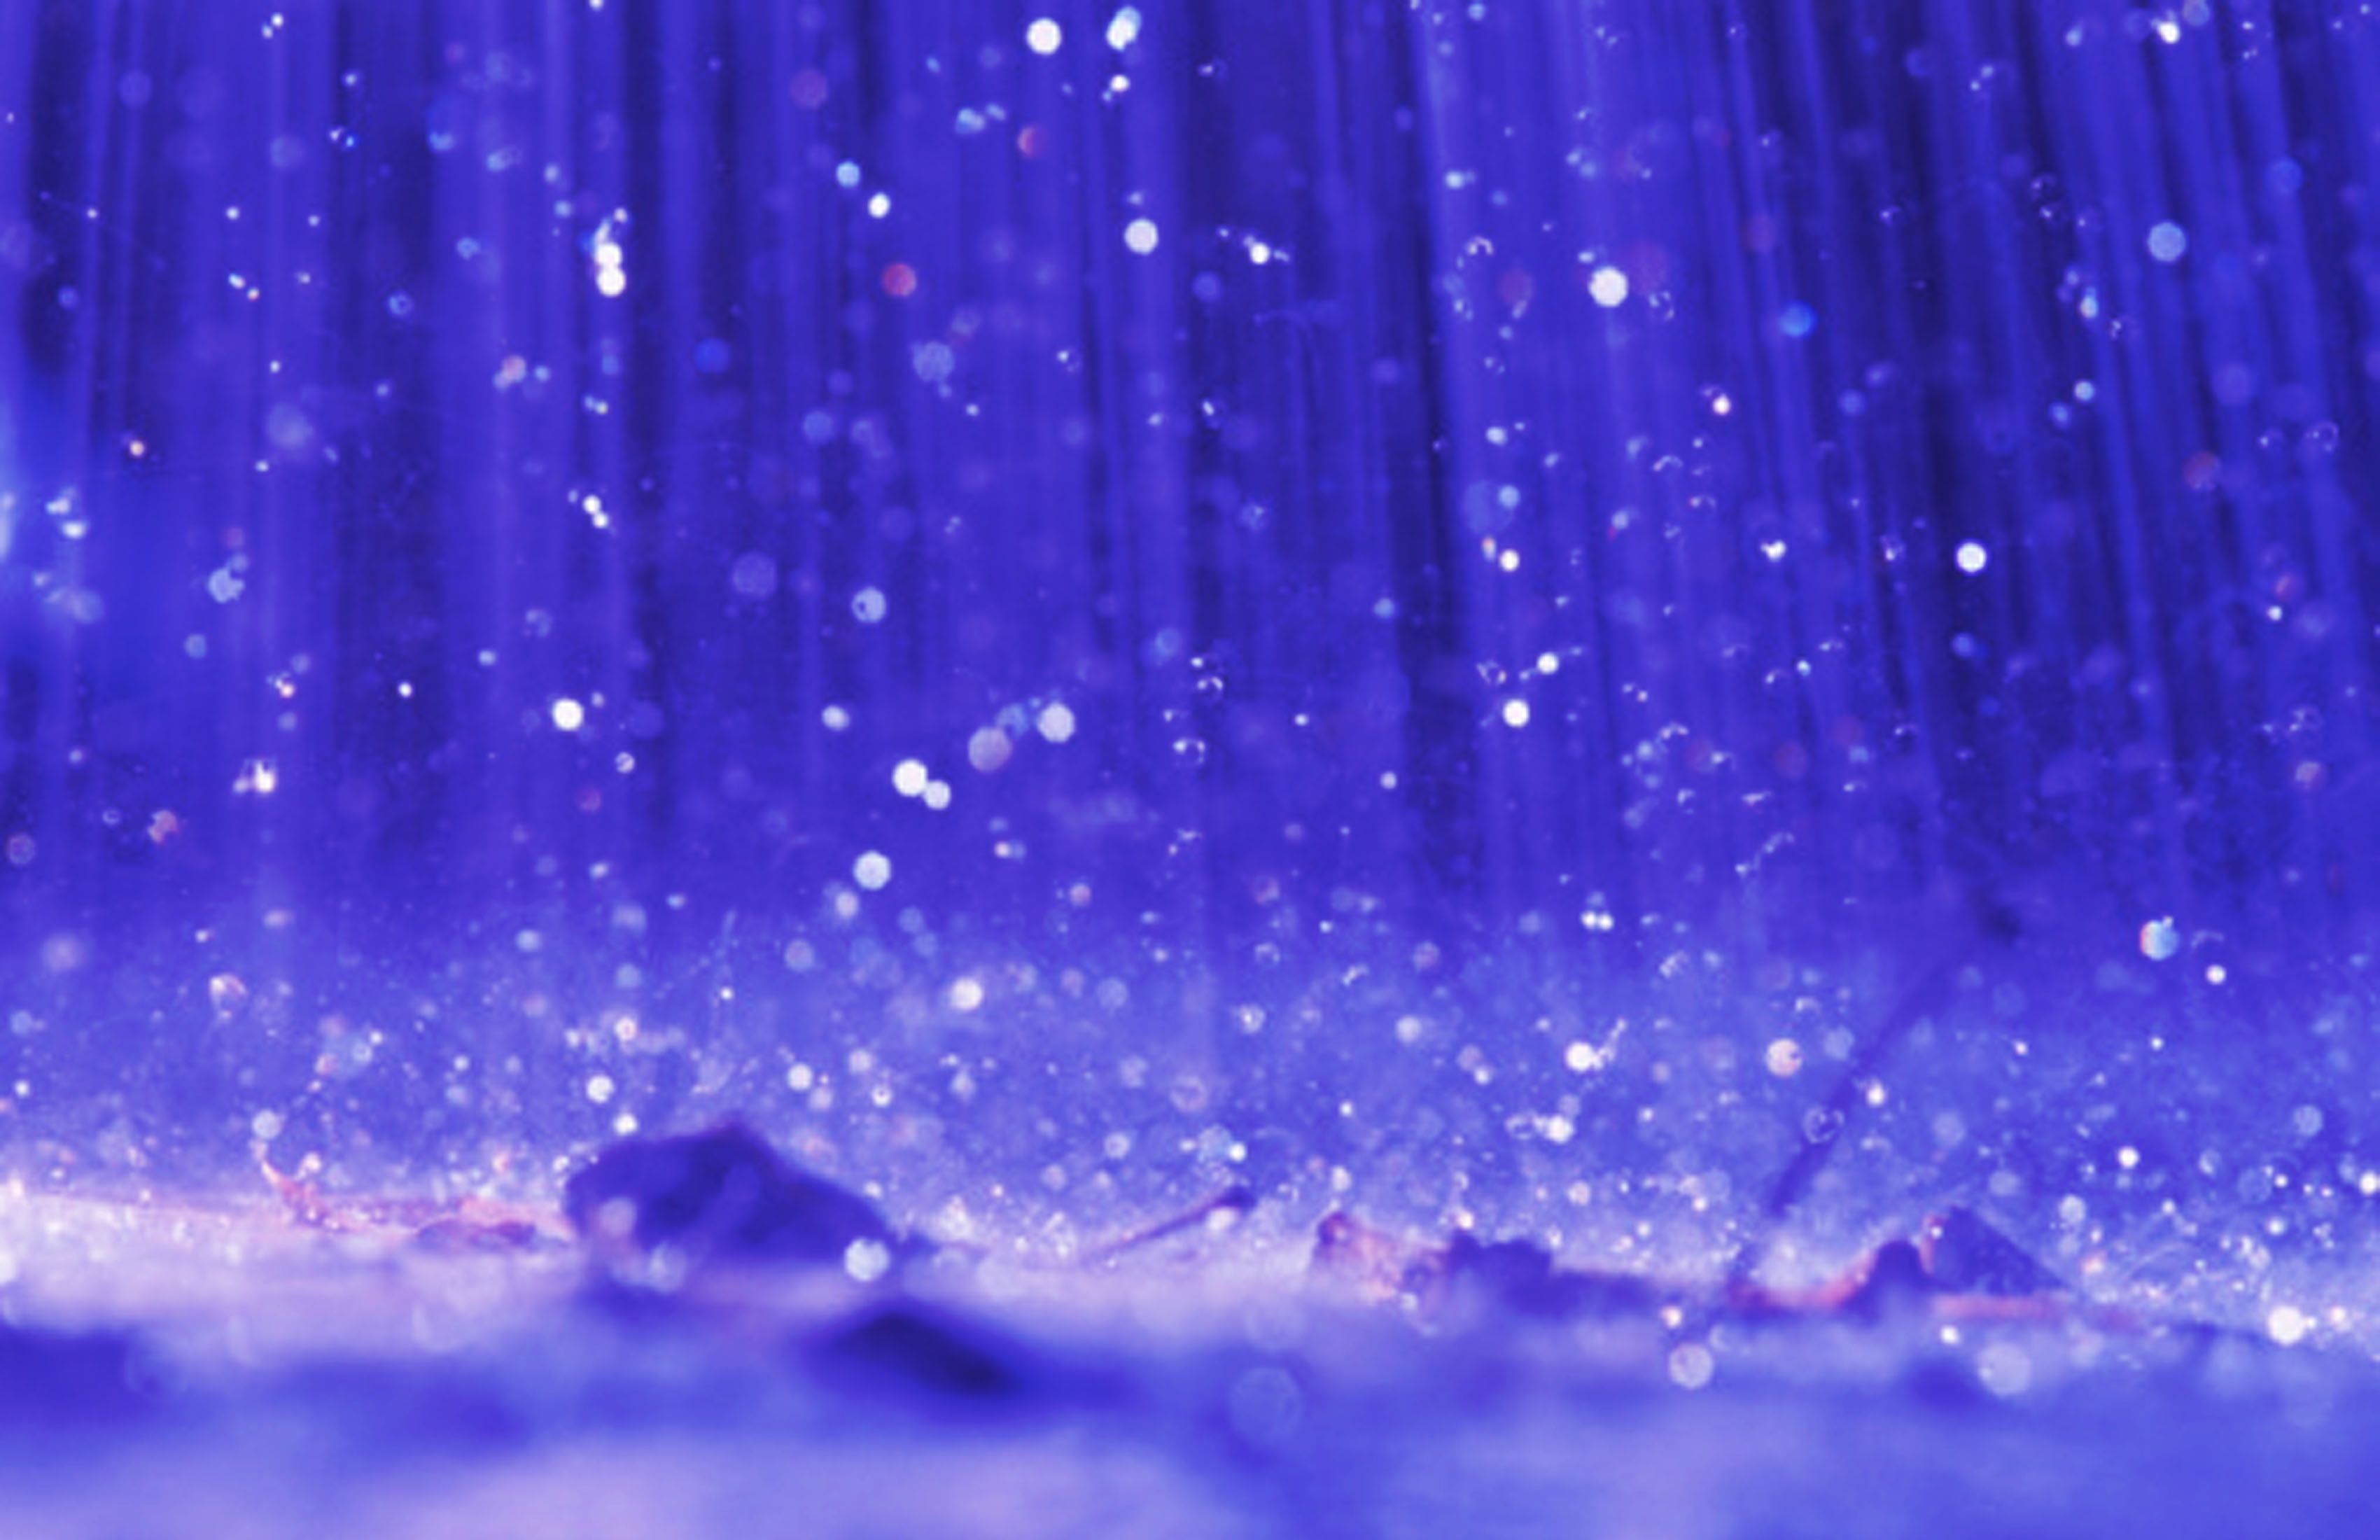 Wallpaper Purple Rain Wallpapers